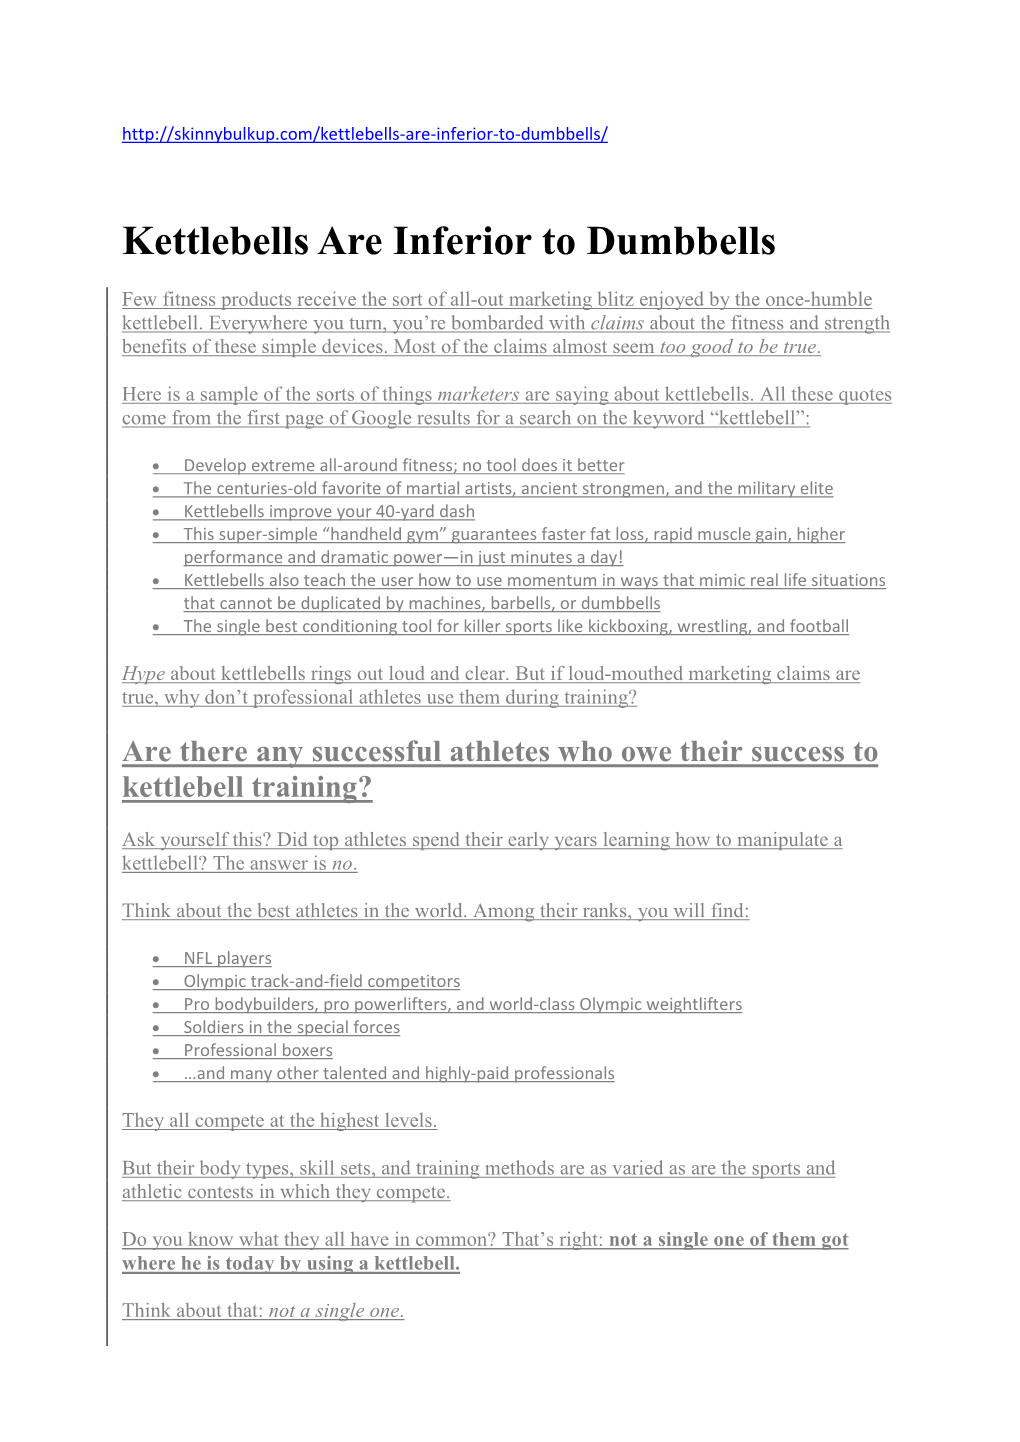 Kettlebells Are Inferior to Dumbbells